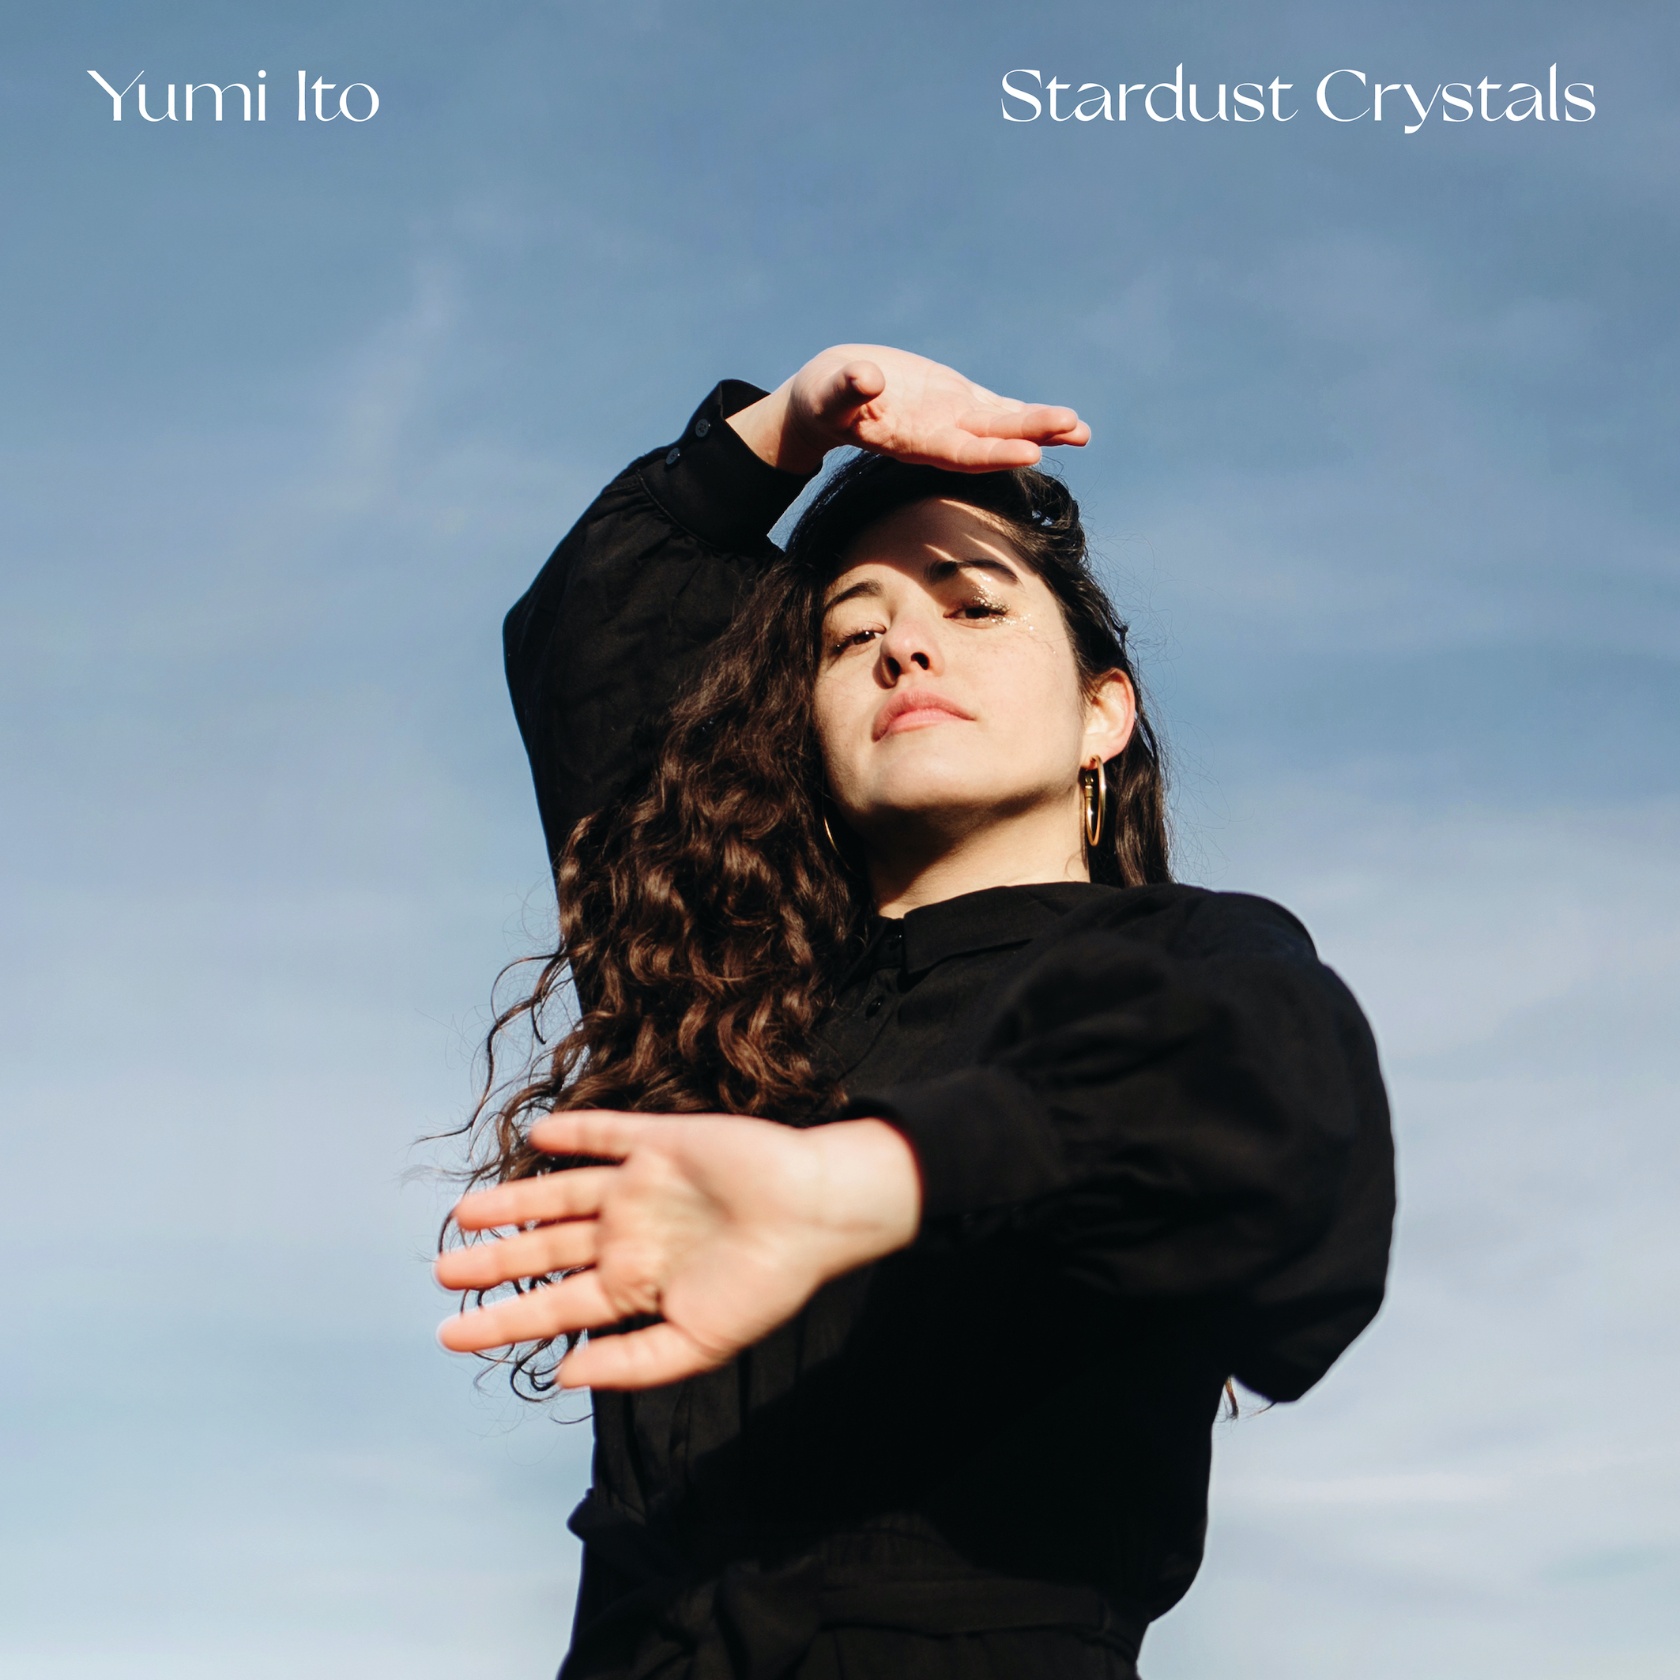 Yumi Ito - Stardust Crystals Cover (c) Maria Jarzyna 2020